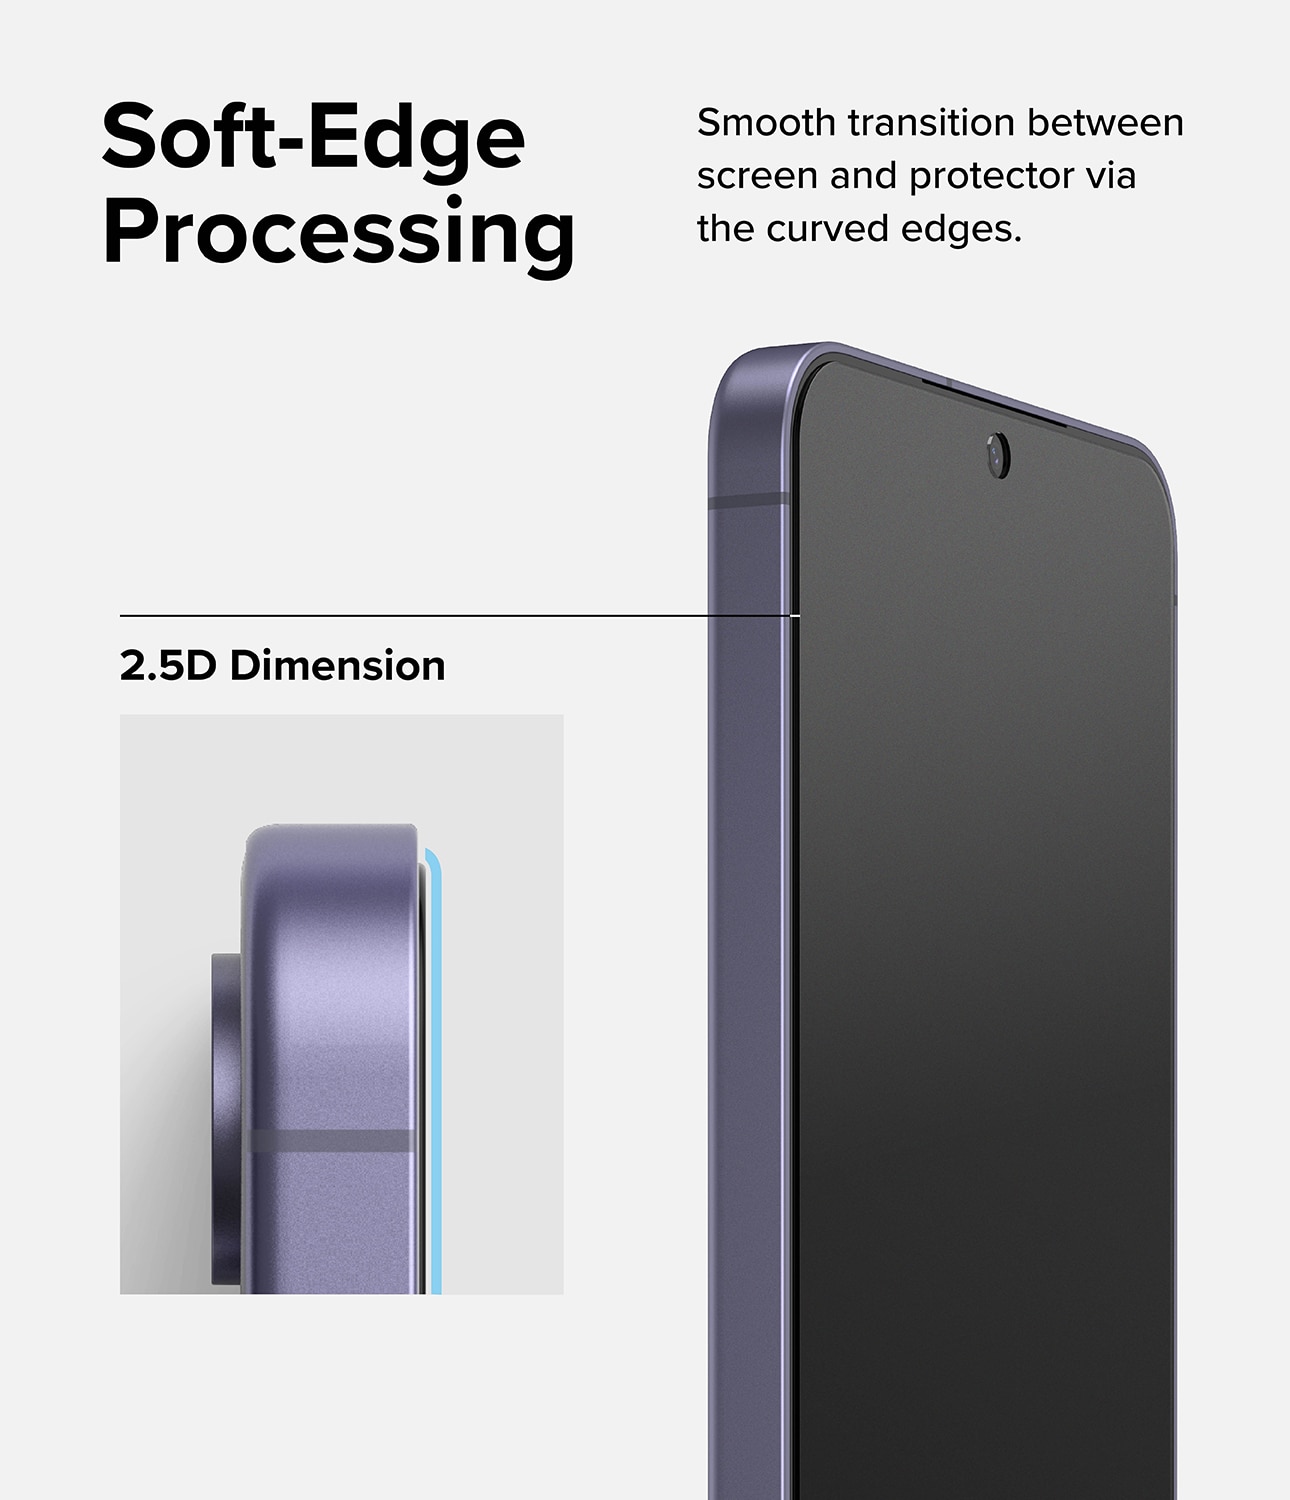 Easy Slide Privacy Glass (2 pièces) Samsung Galaxy S24